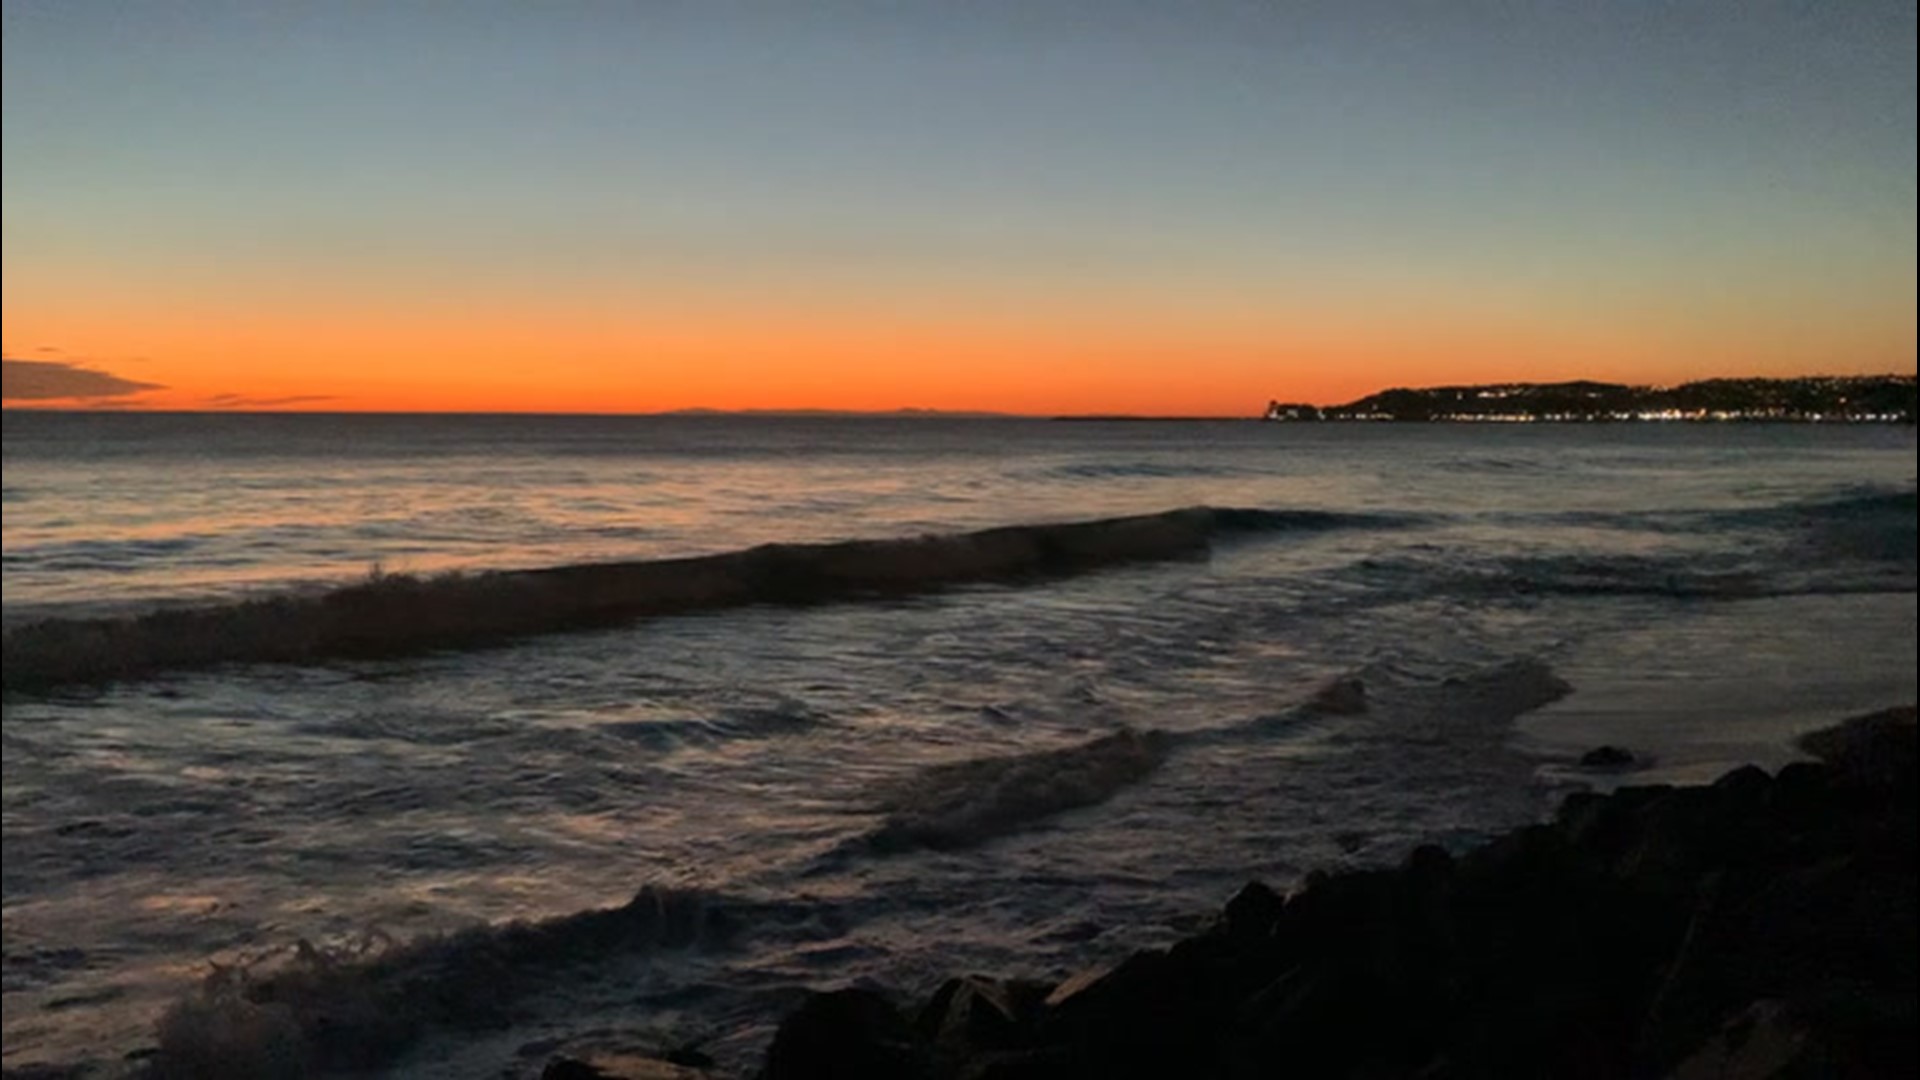 AccuWeather's Bill Wadell captured this stunning sunset over Capistrano Beach, California, on Wednesday, Jan. 20.